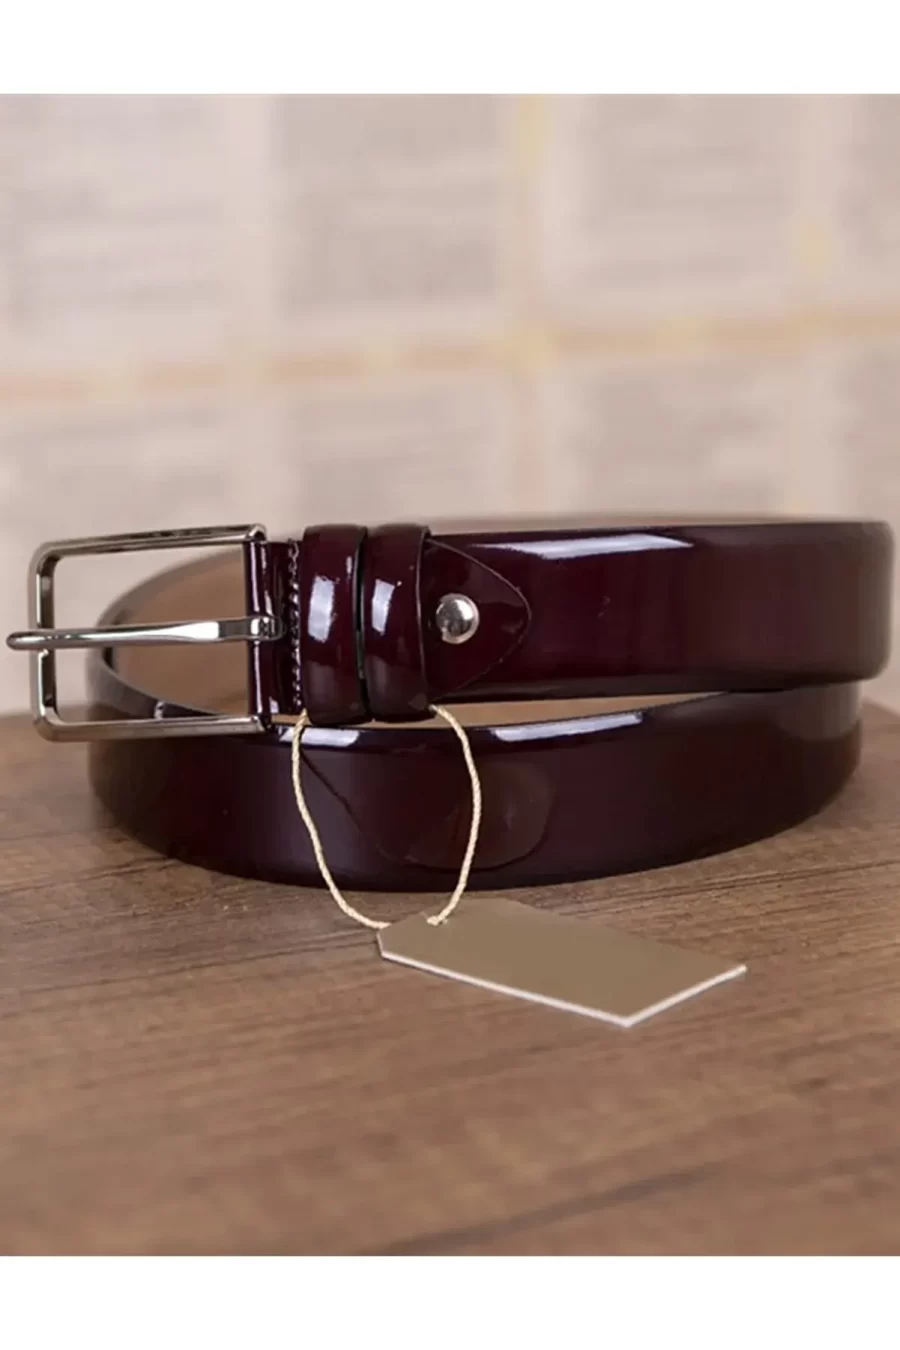 Burgundy Gents Patent Leather Belt KD 001 7 2